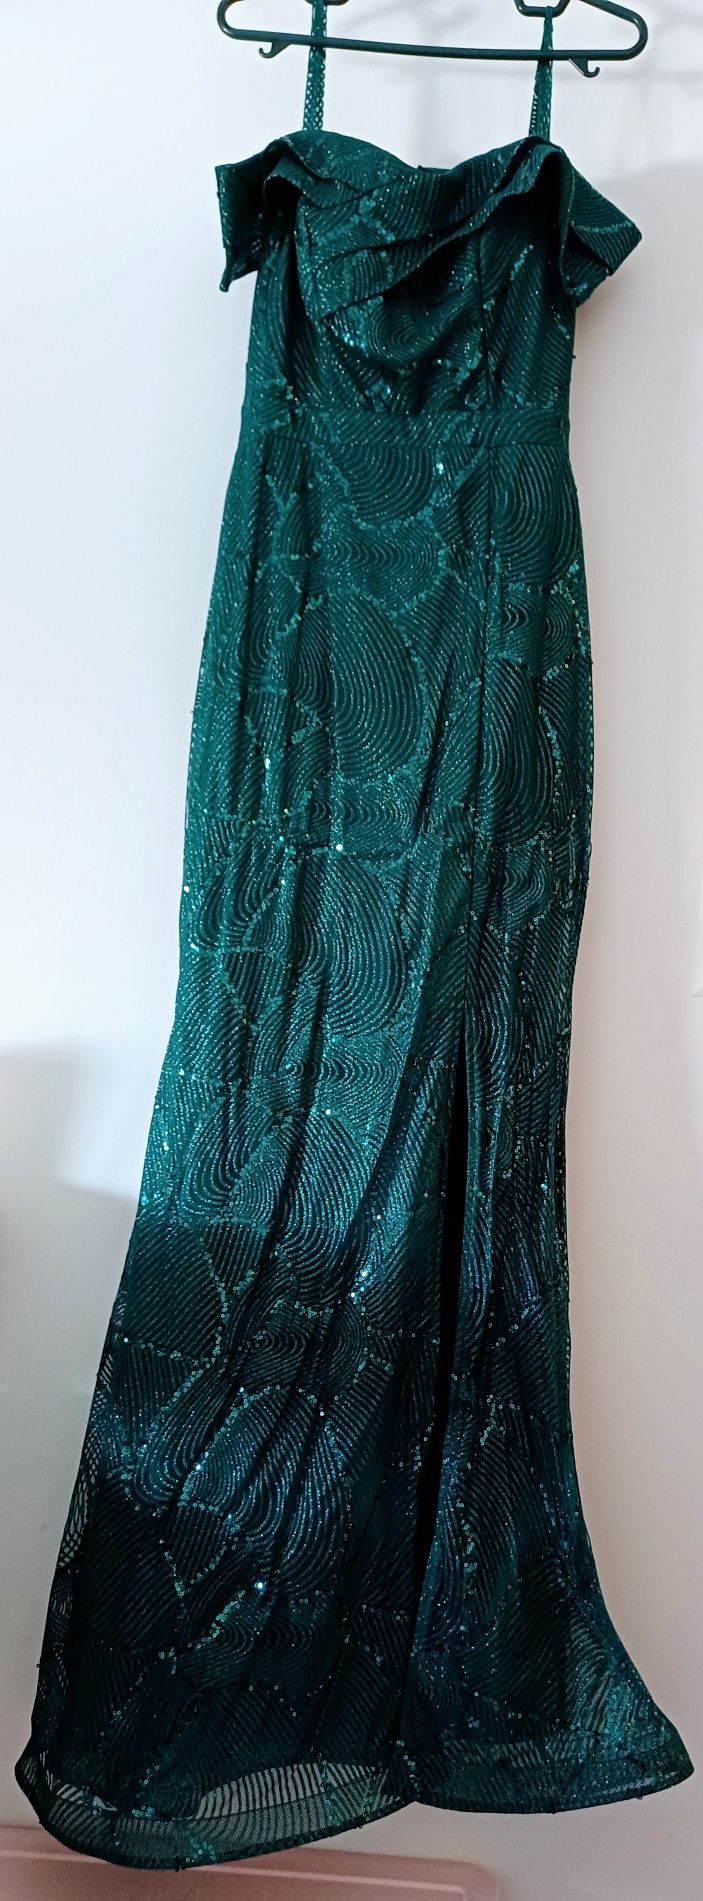 Vând rochie verde smarald